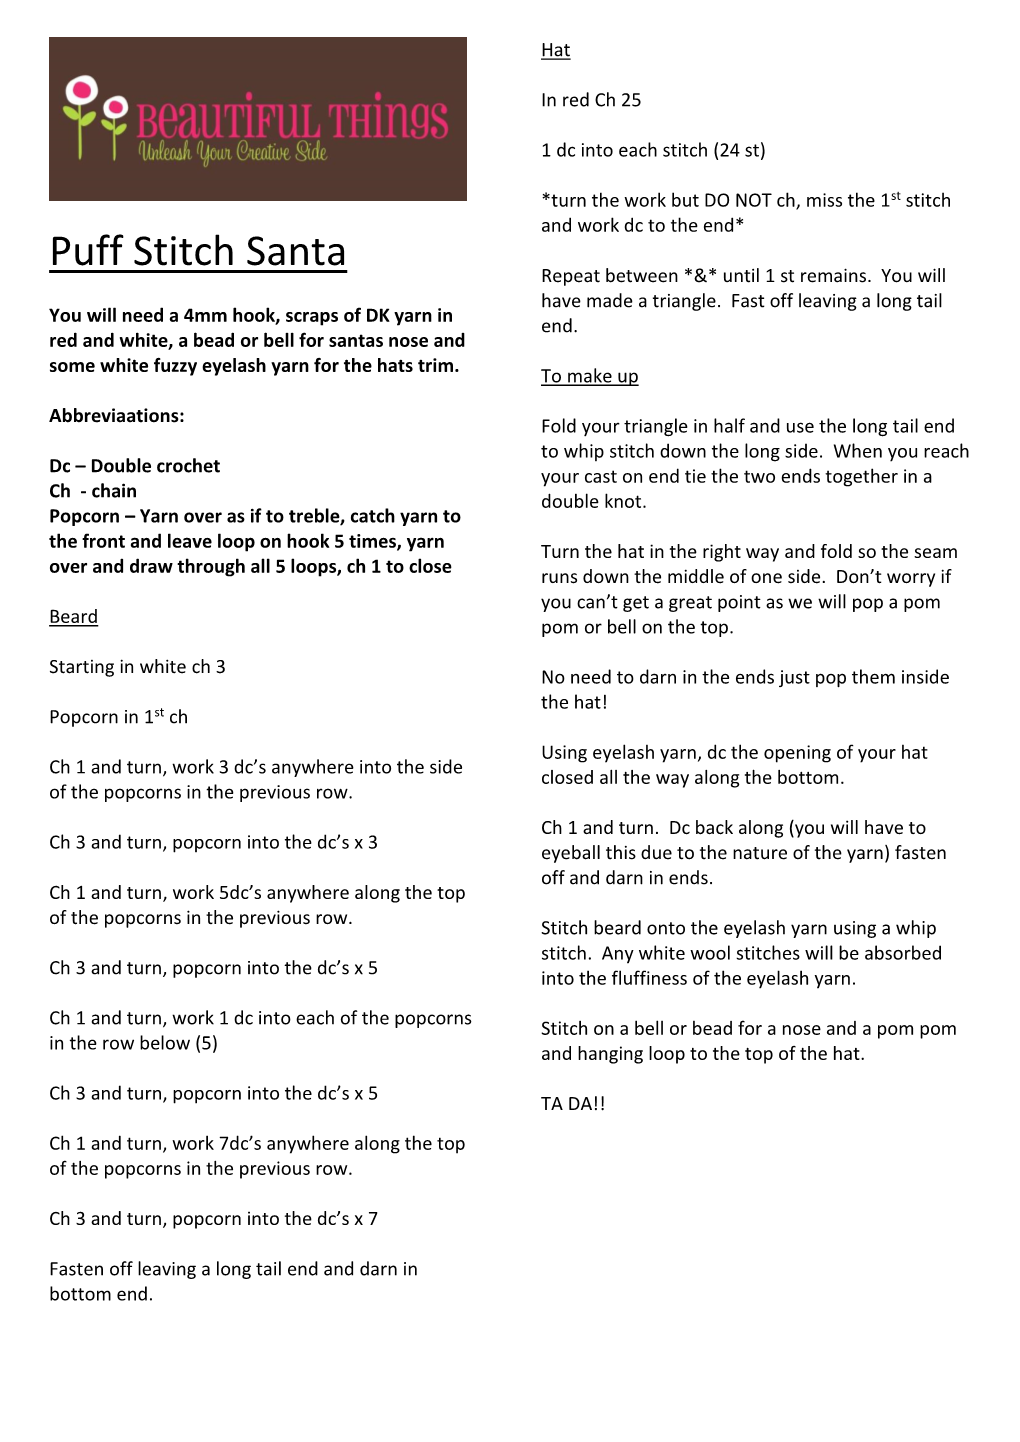 Puff Stitch Santa Repeat Between *&* Until 1 St Remains